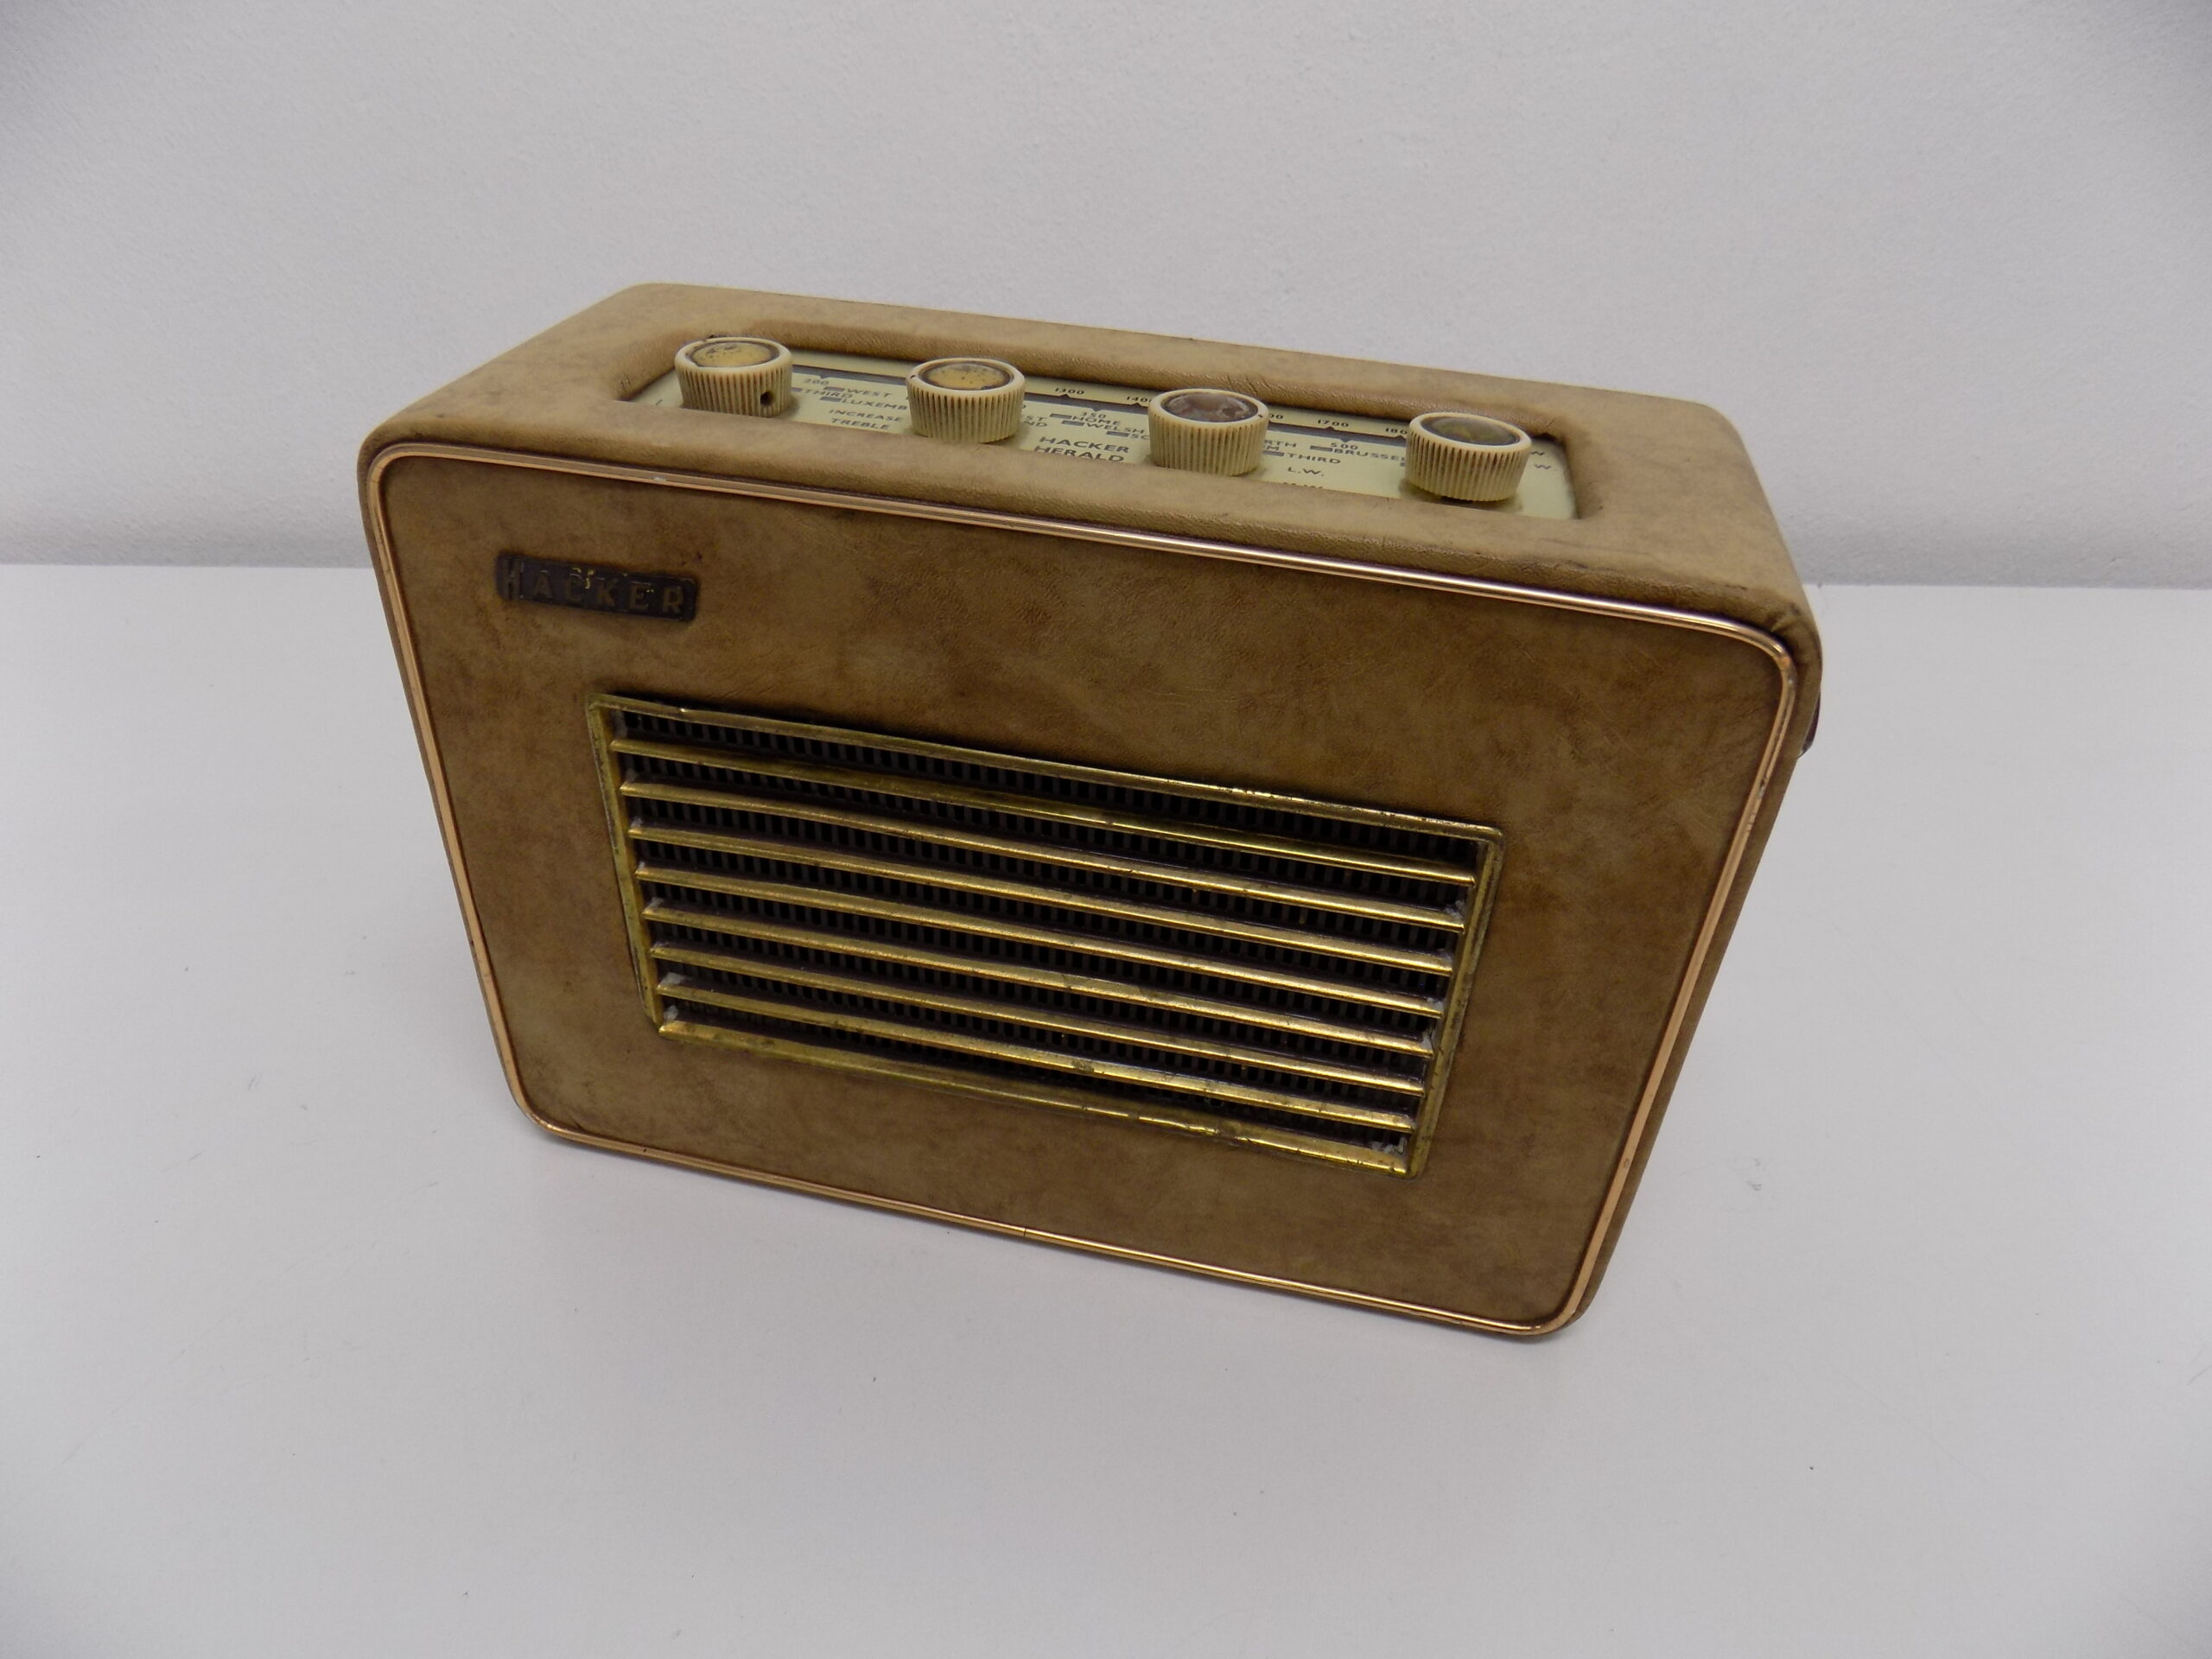 Hacker herald radio. Vintage.